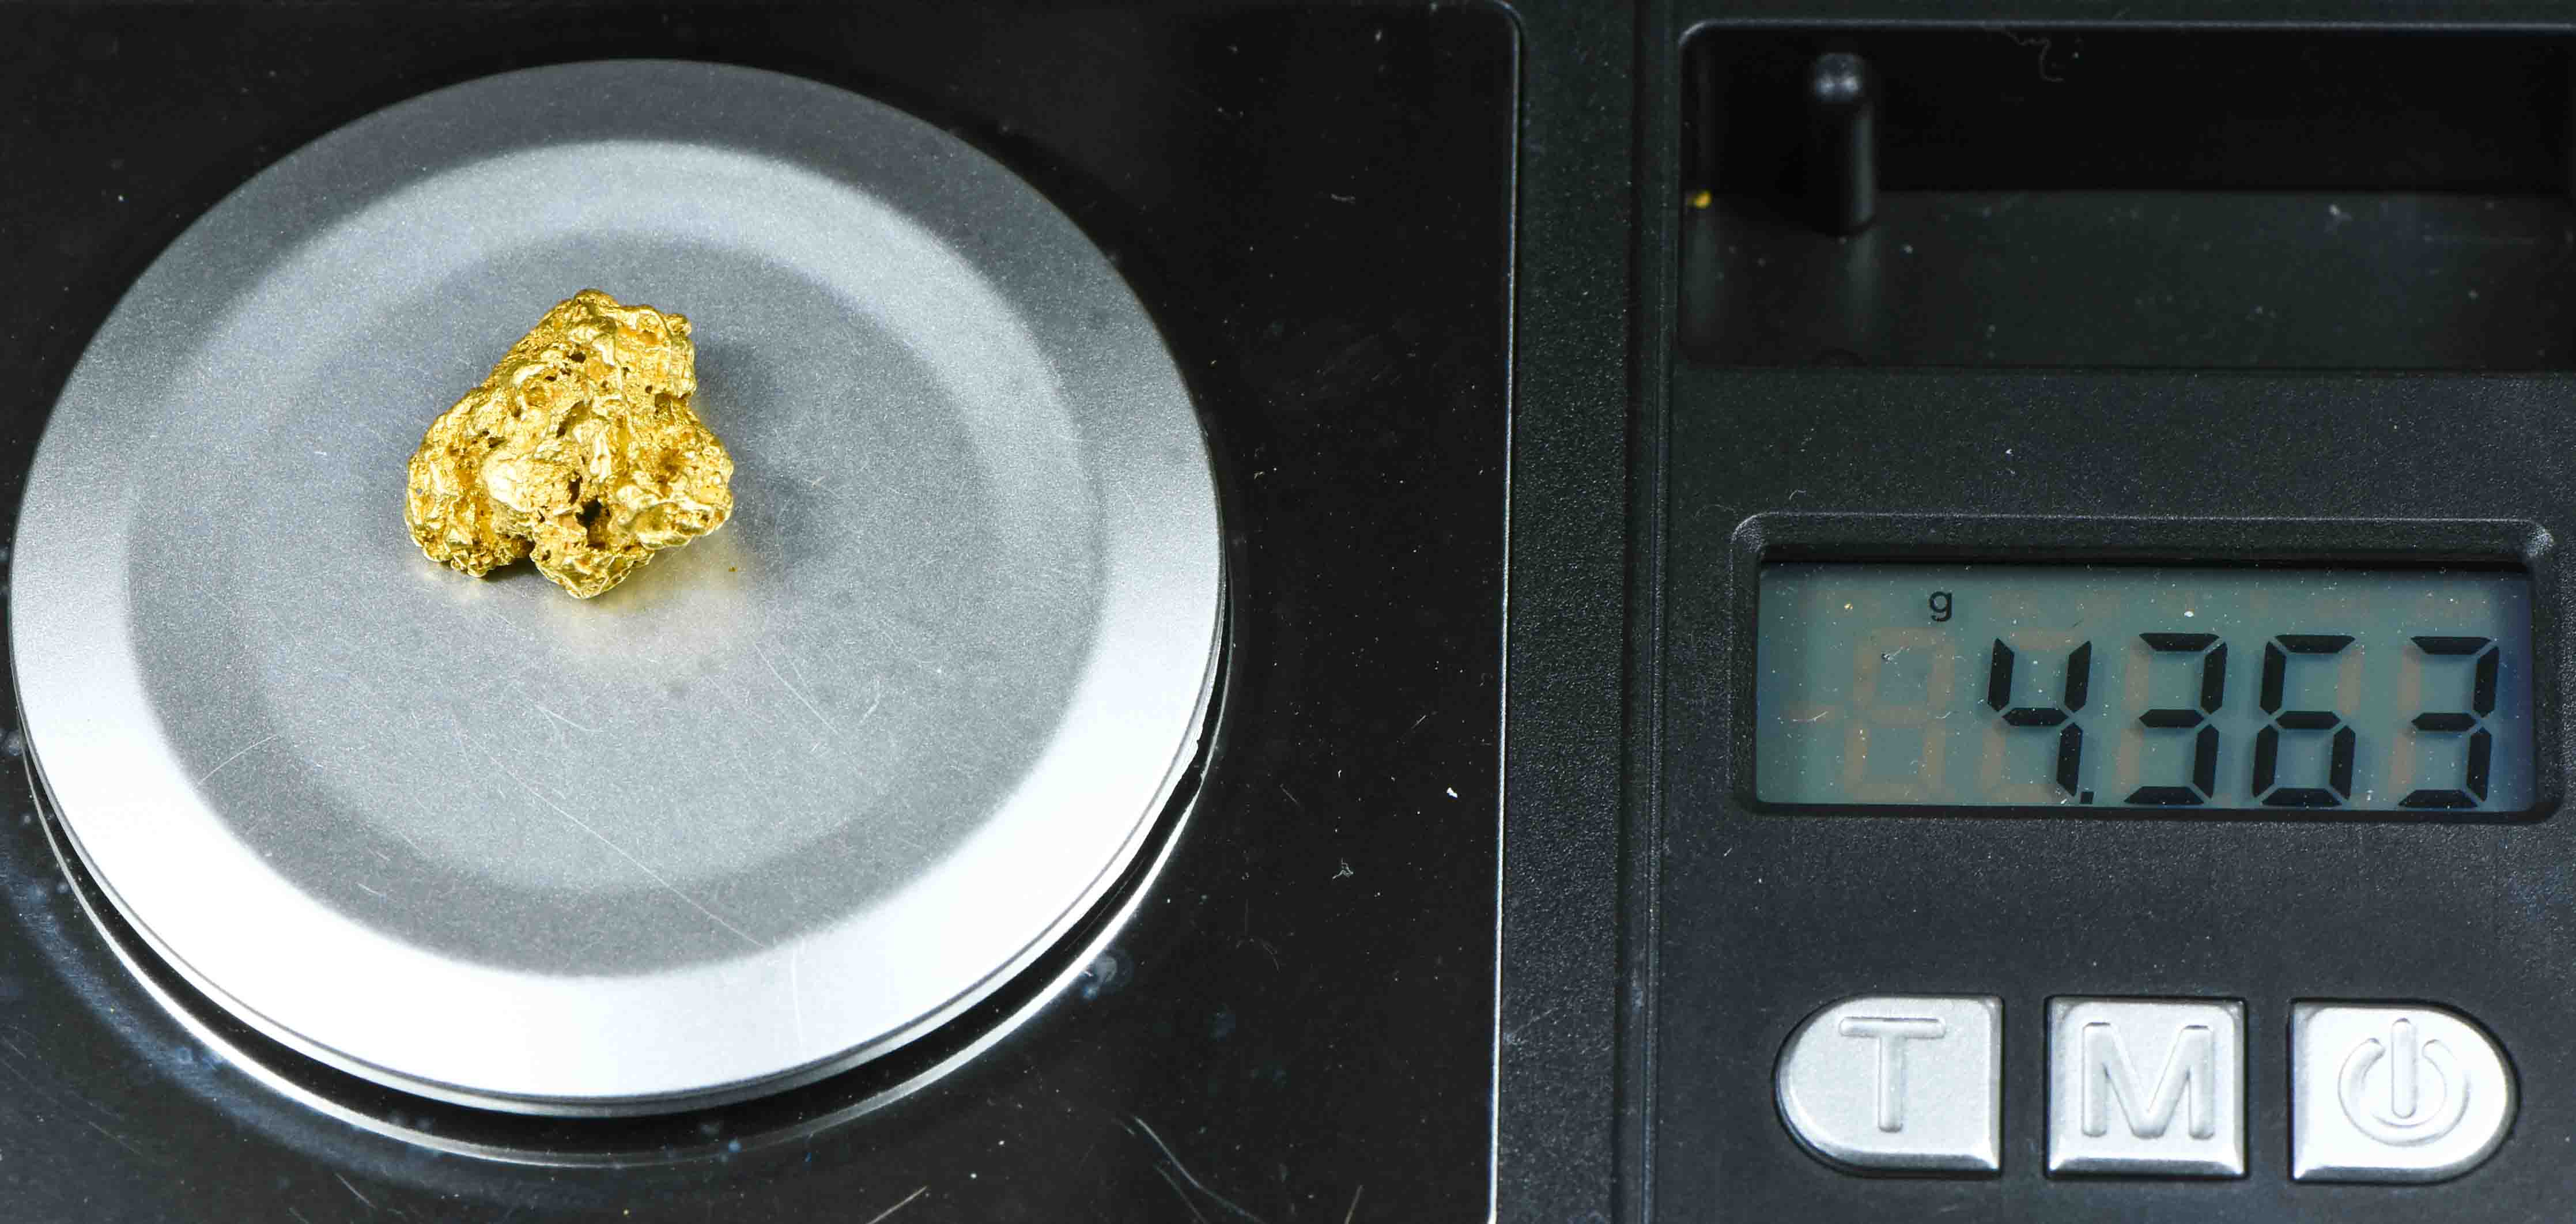 #936 Natural Gold Nugget Australian 4.36 Grams Genuine